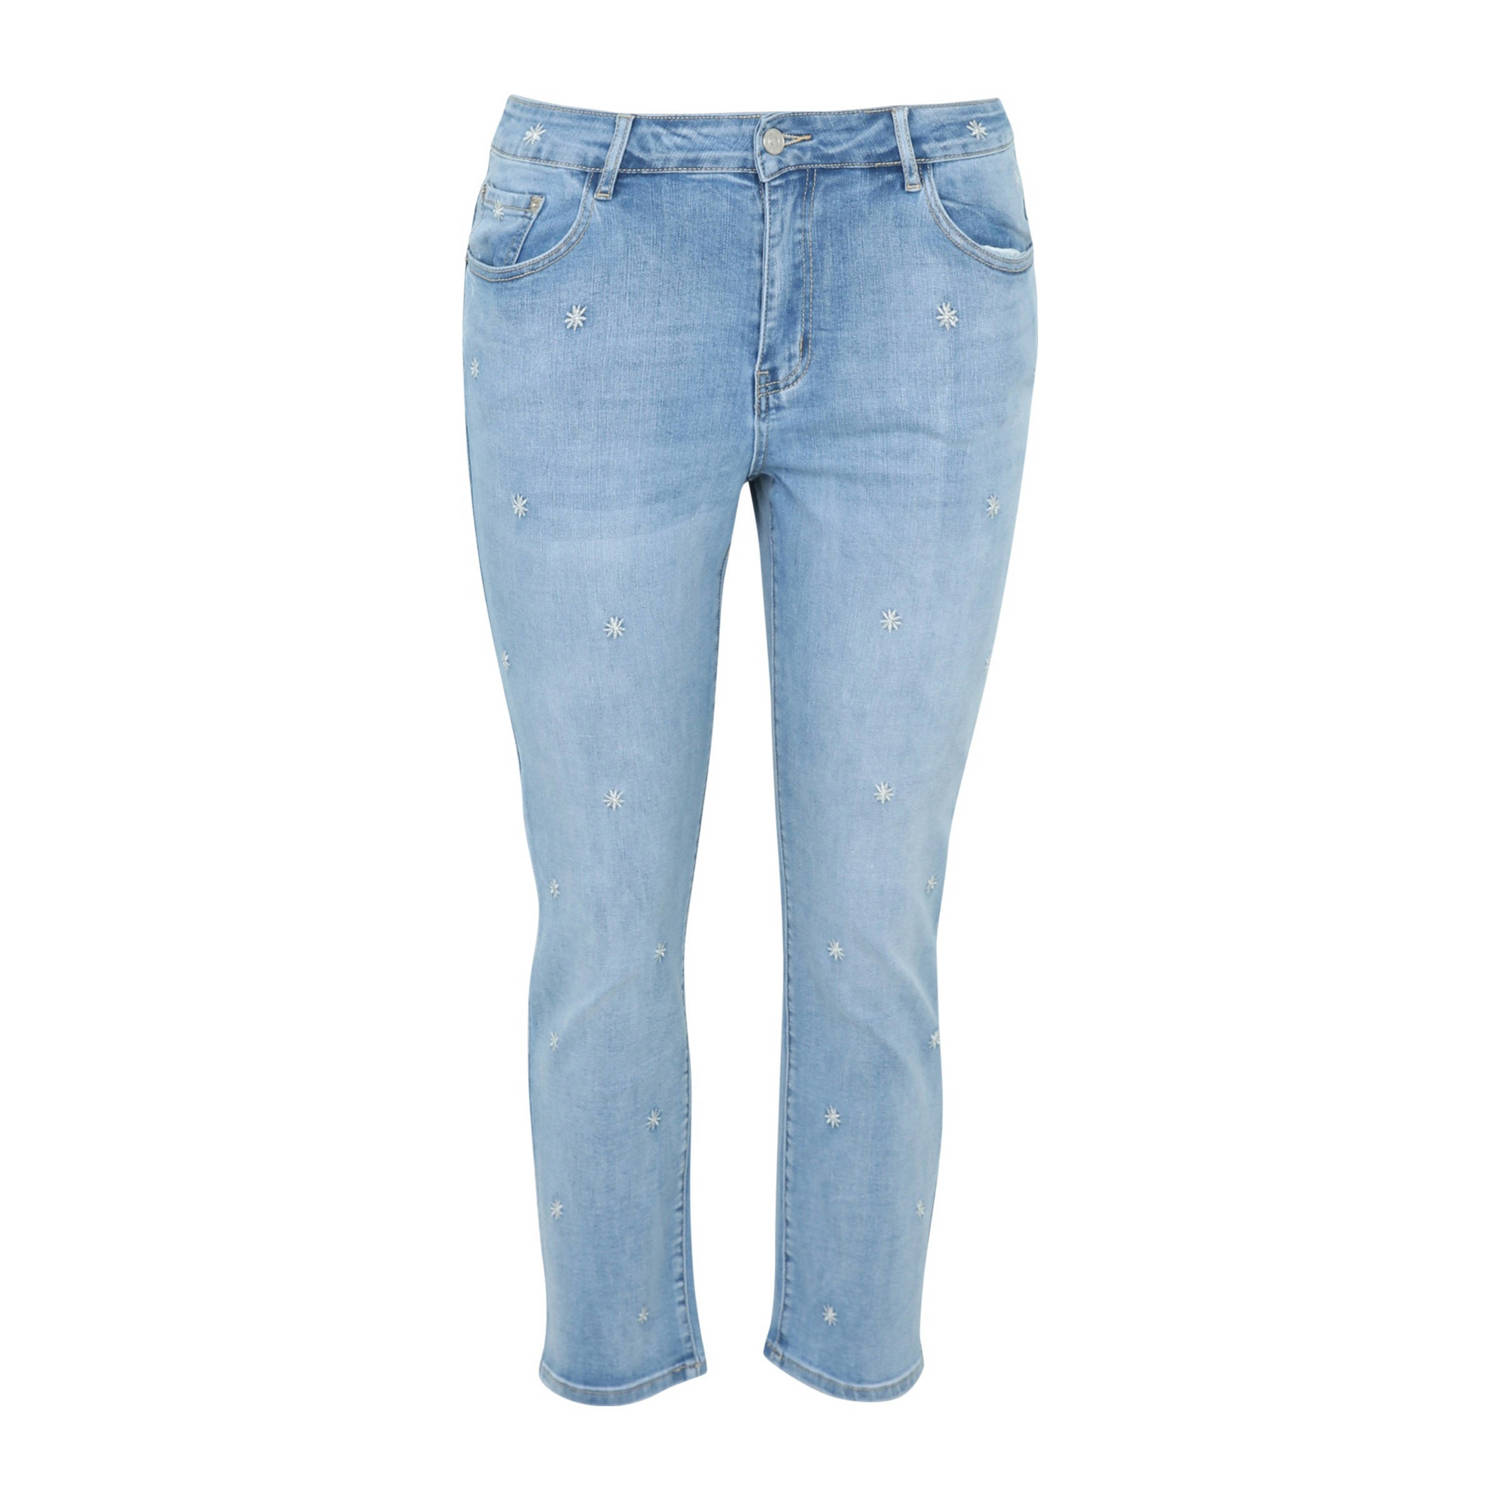 Paprika slim fit jeans light blue denim